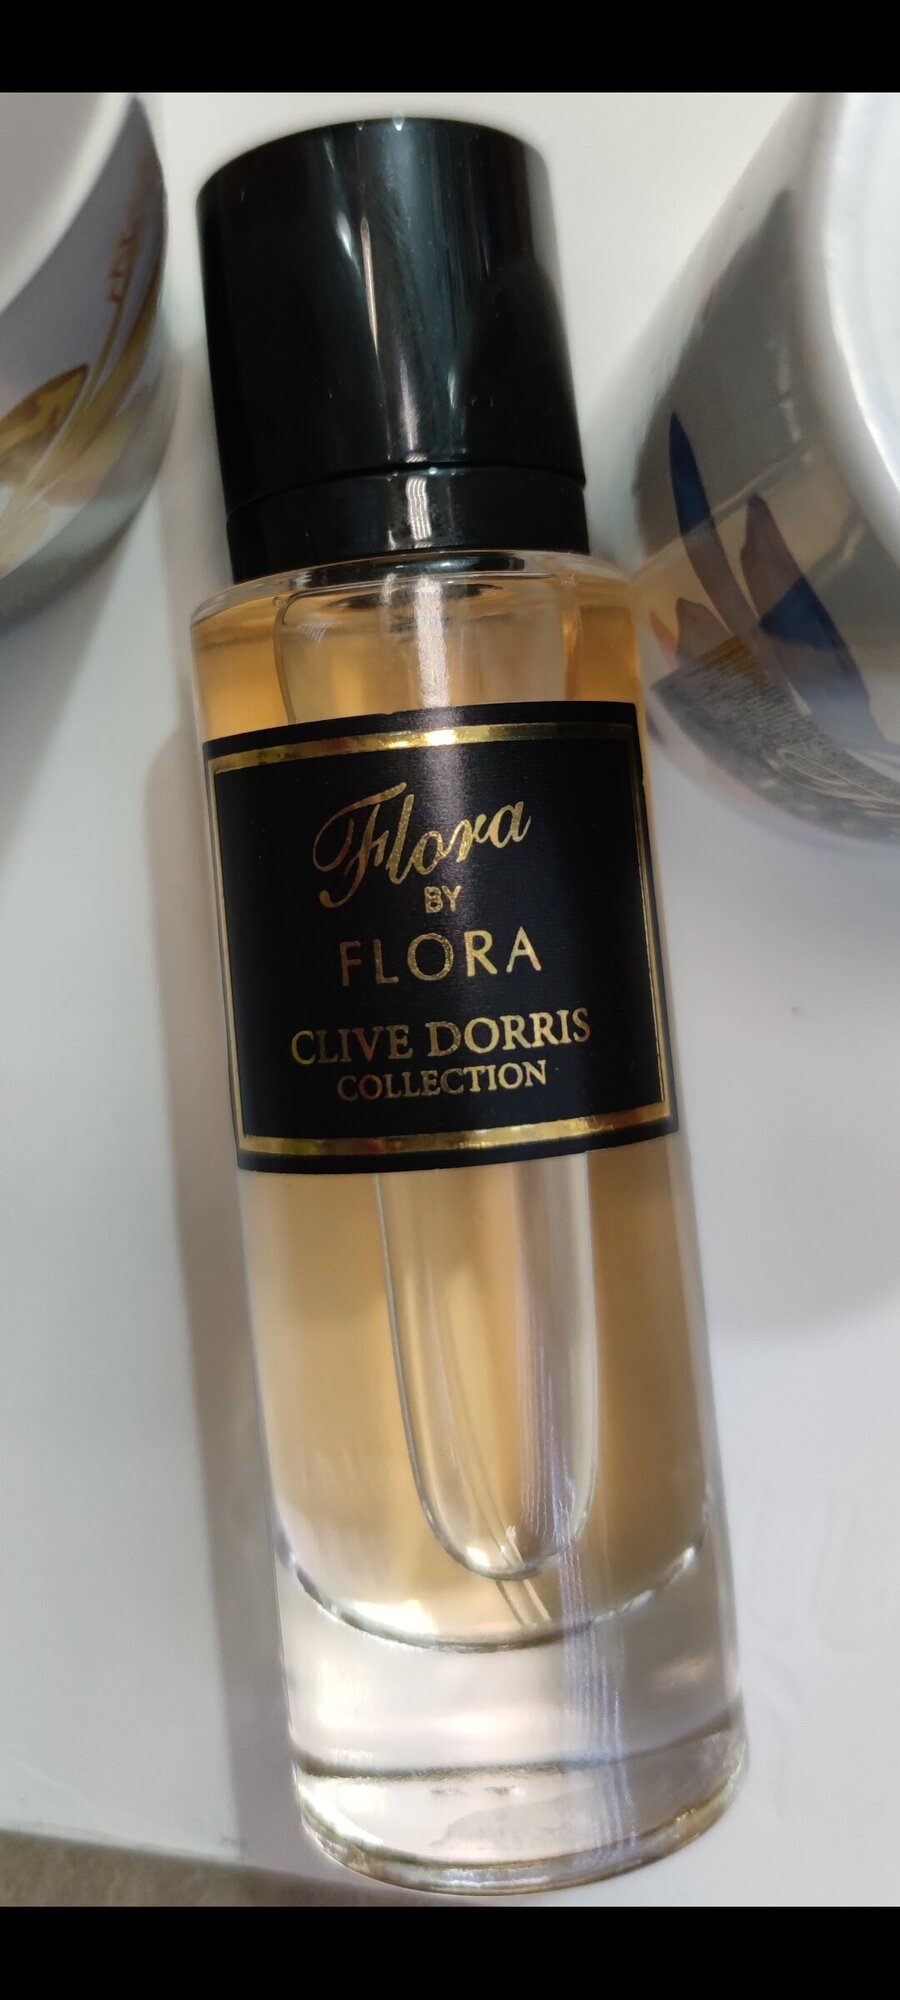 Flora by Flora Флора за флорой Коллекция Клайва Дорриса Парфюм 30мл ОАЭ